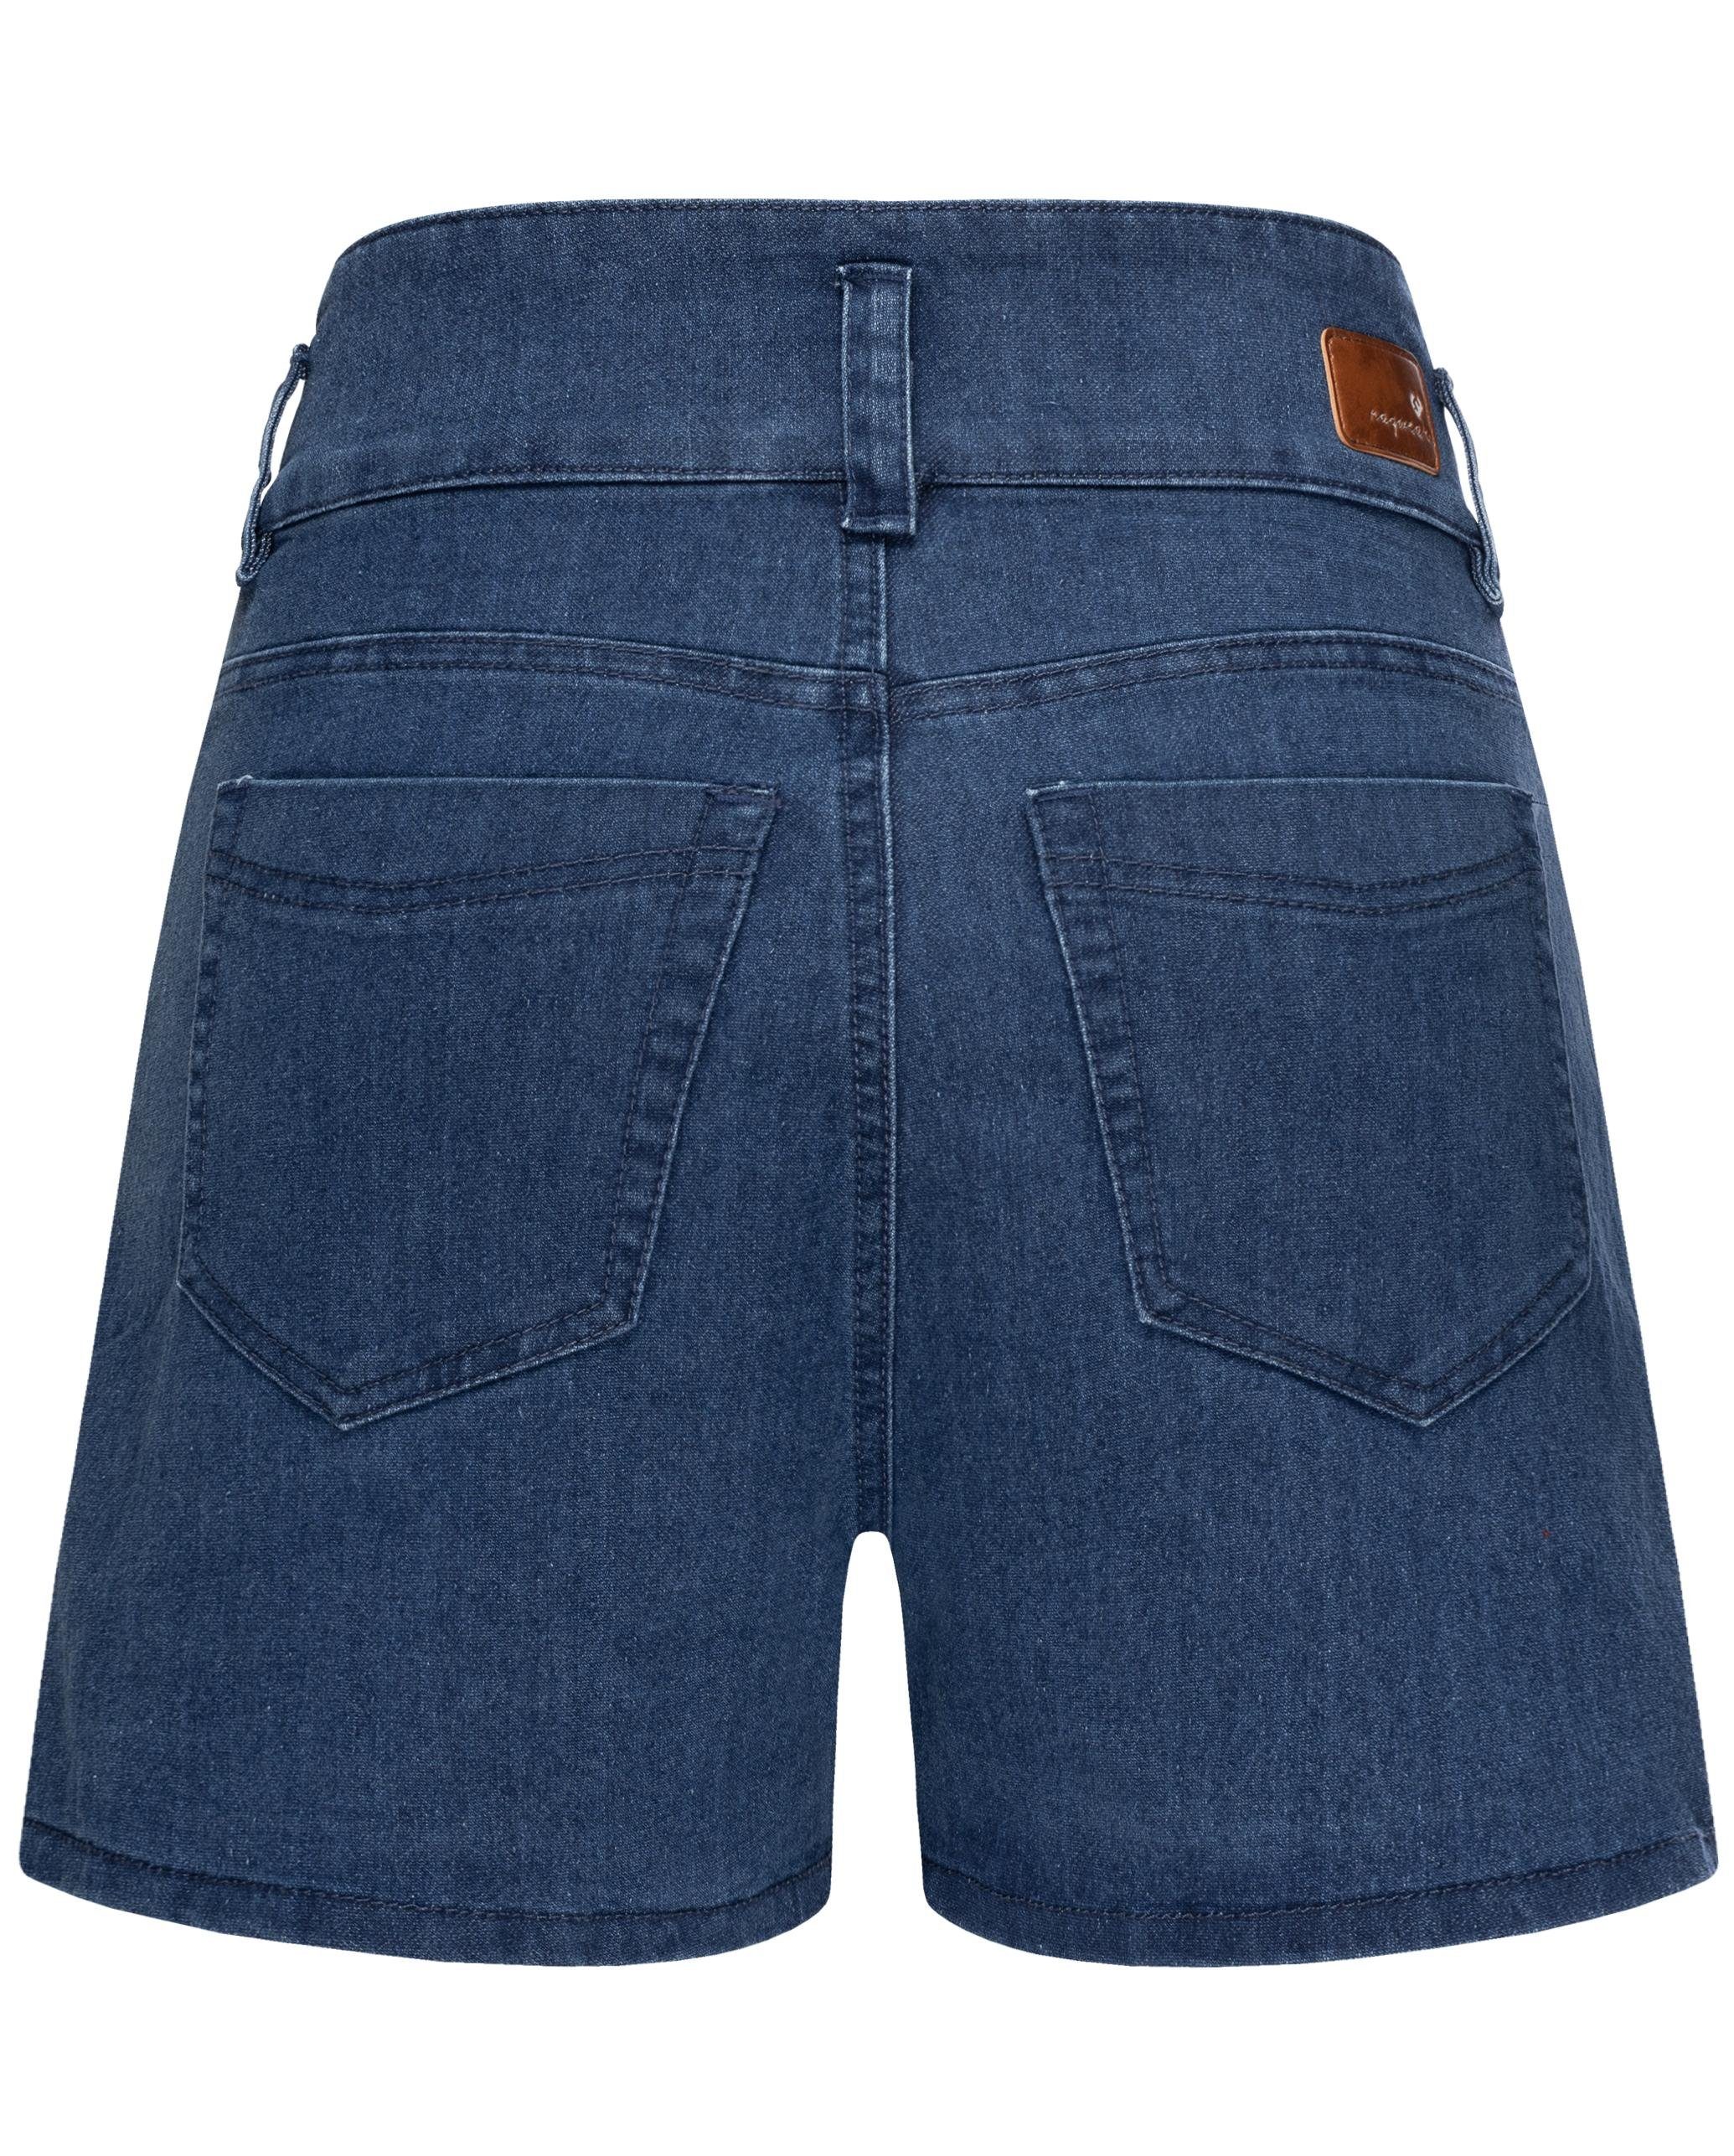 Ragwear Shorts Suzzie stylische, Sommerhose Jeansoptik in kurze indigo